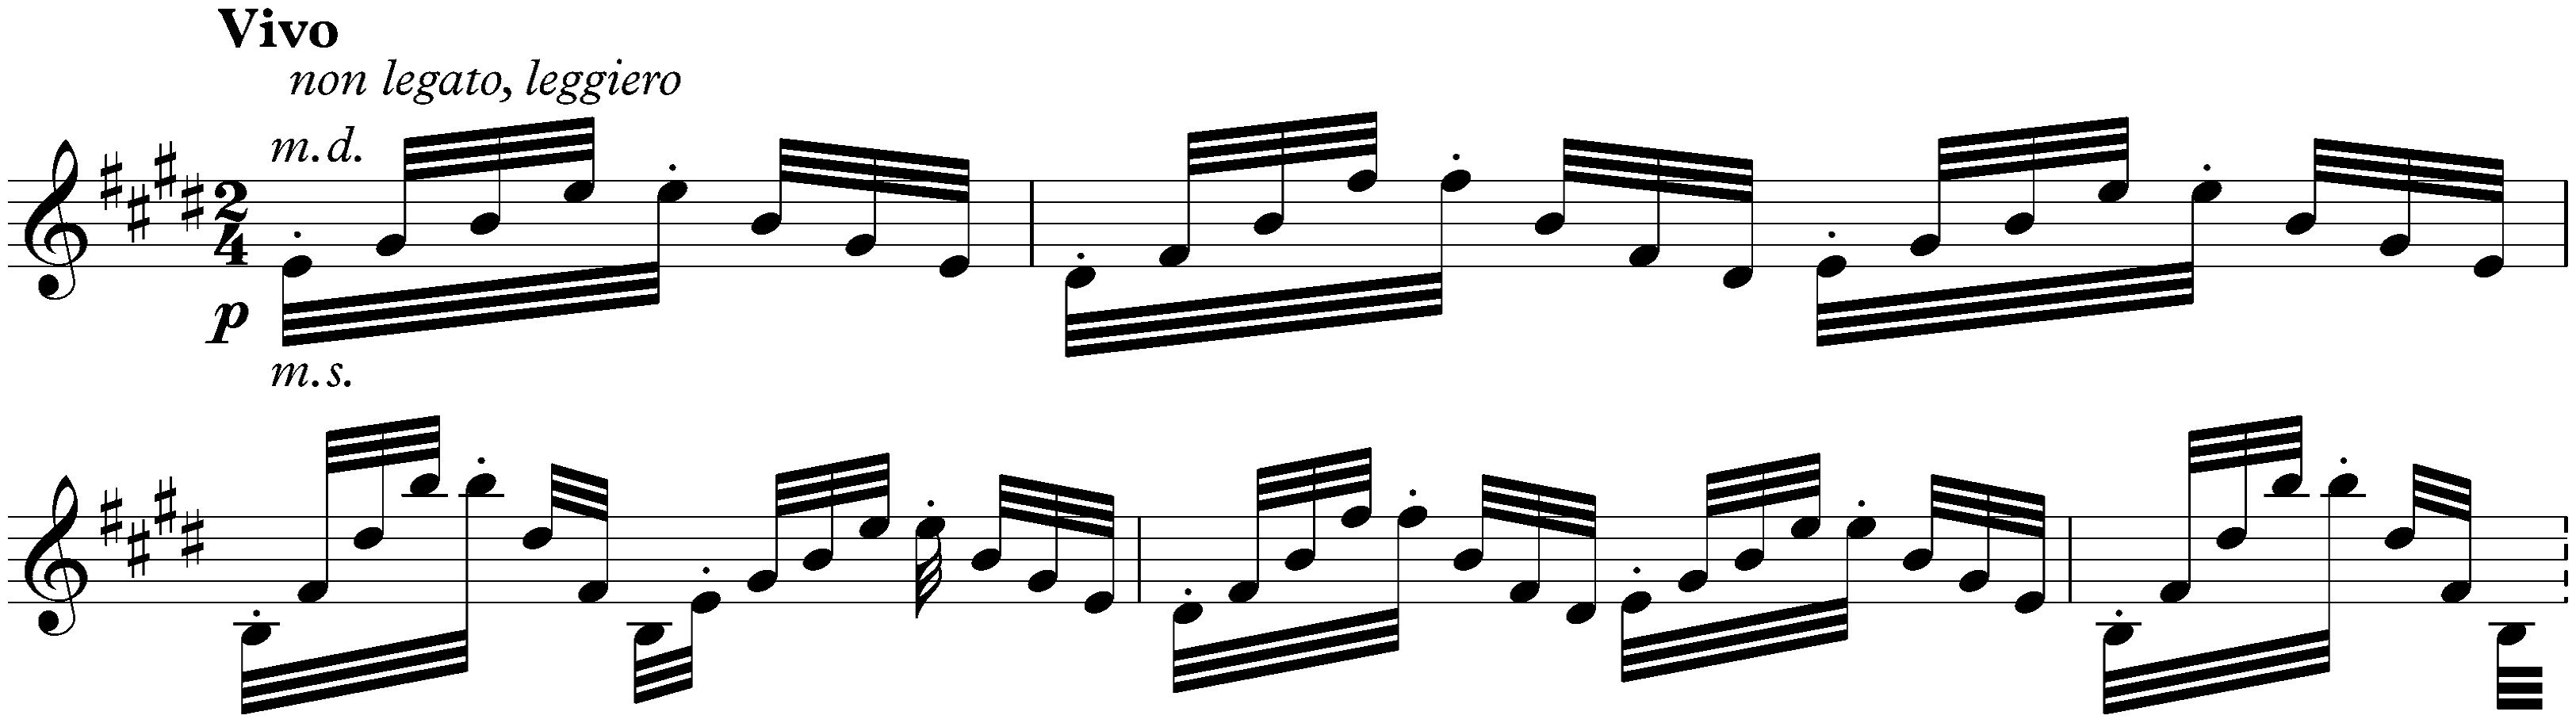 Six Grandes études de Paganini, S. 141; 4. E major